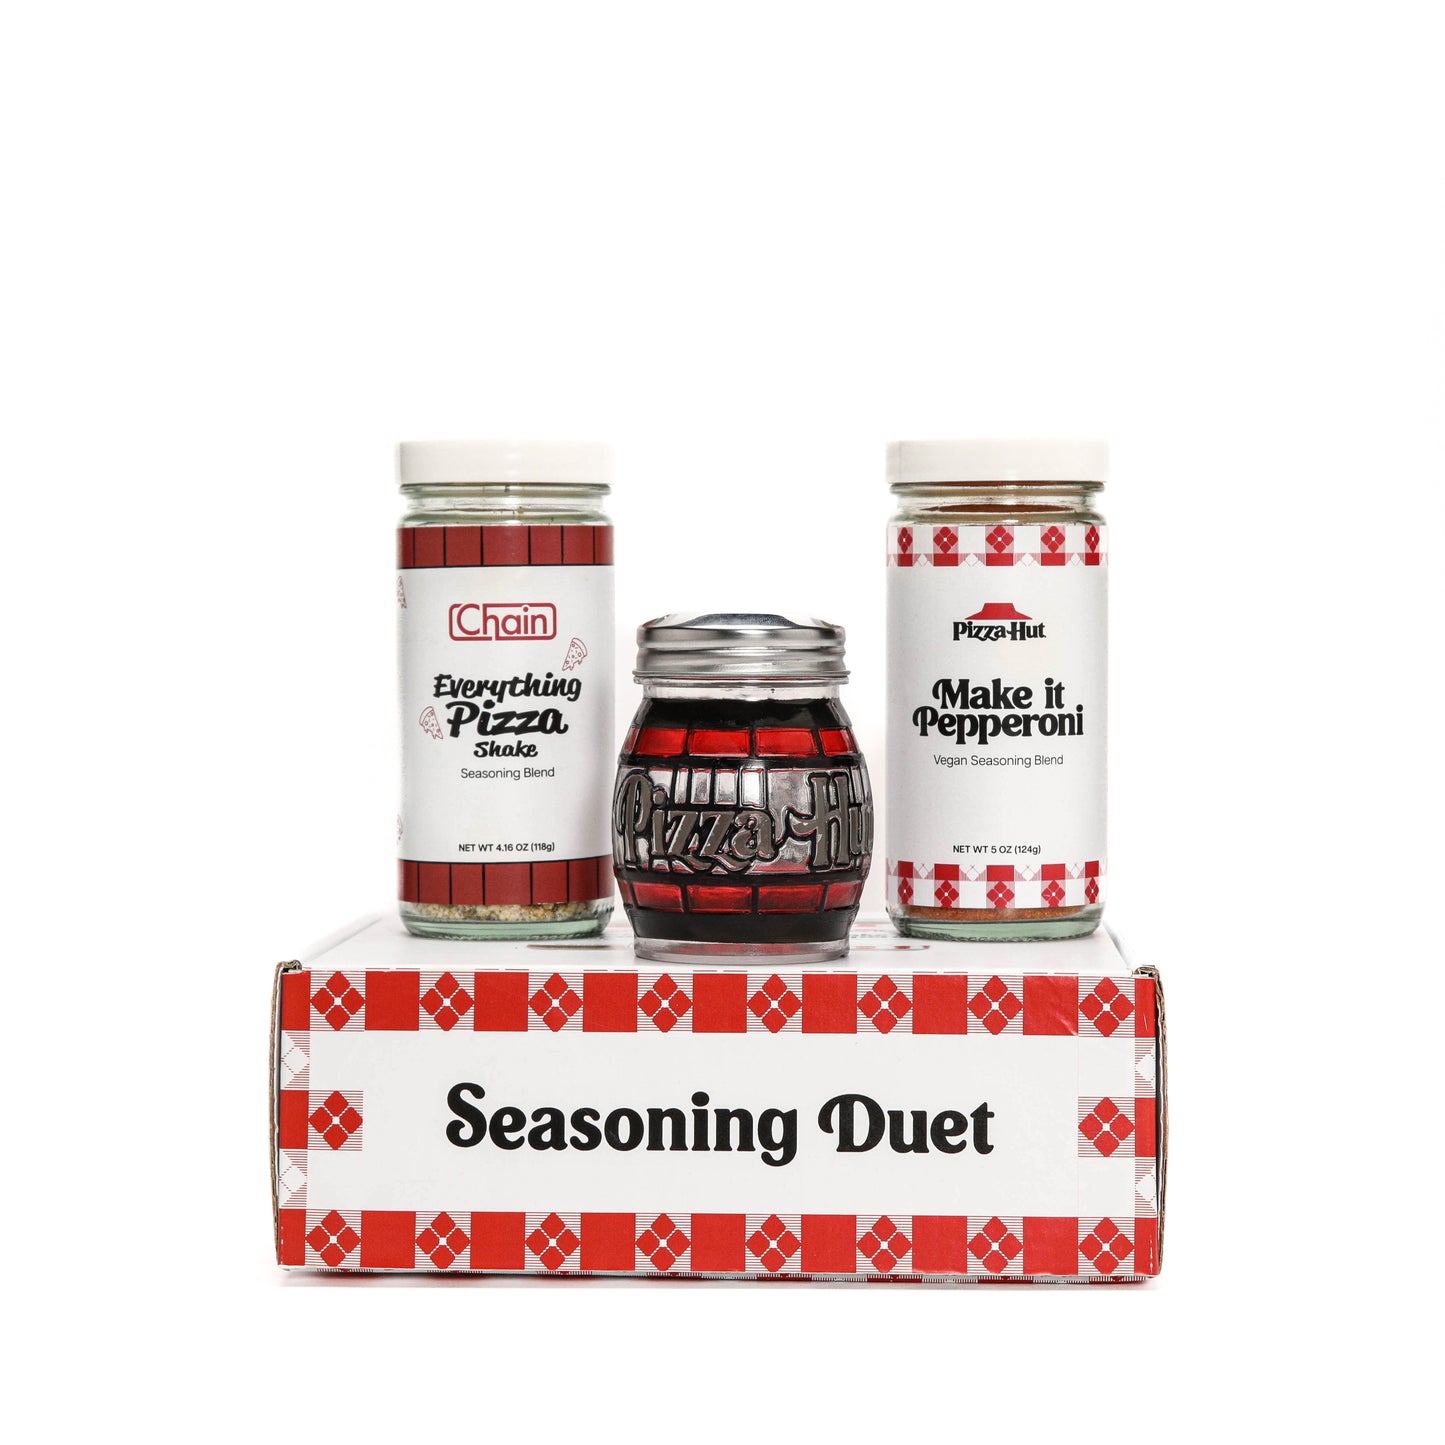 The Collectible Seasoning Duet Box Set